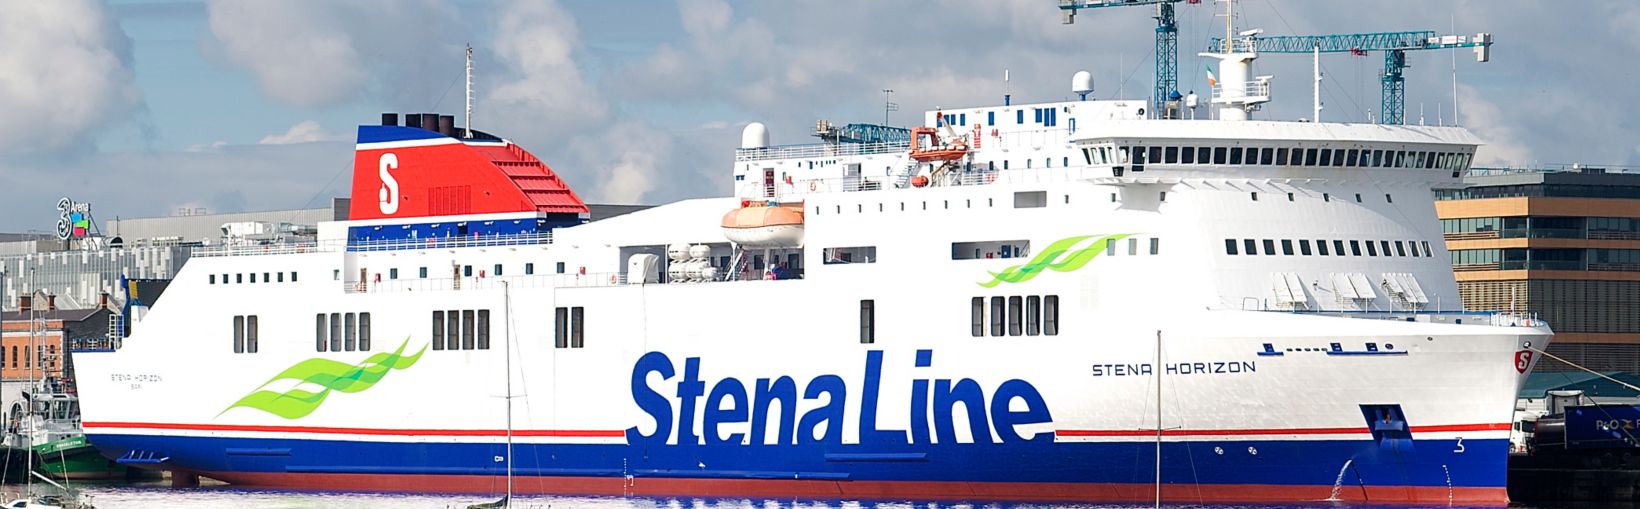 Stena Horizon ferry docked at port